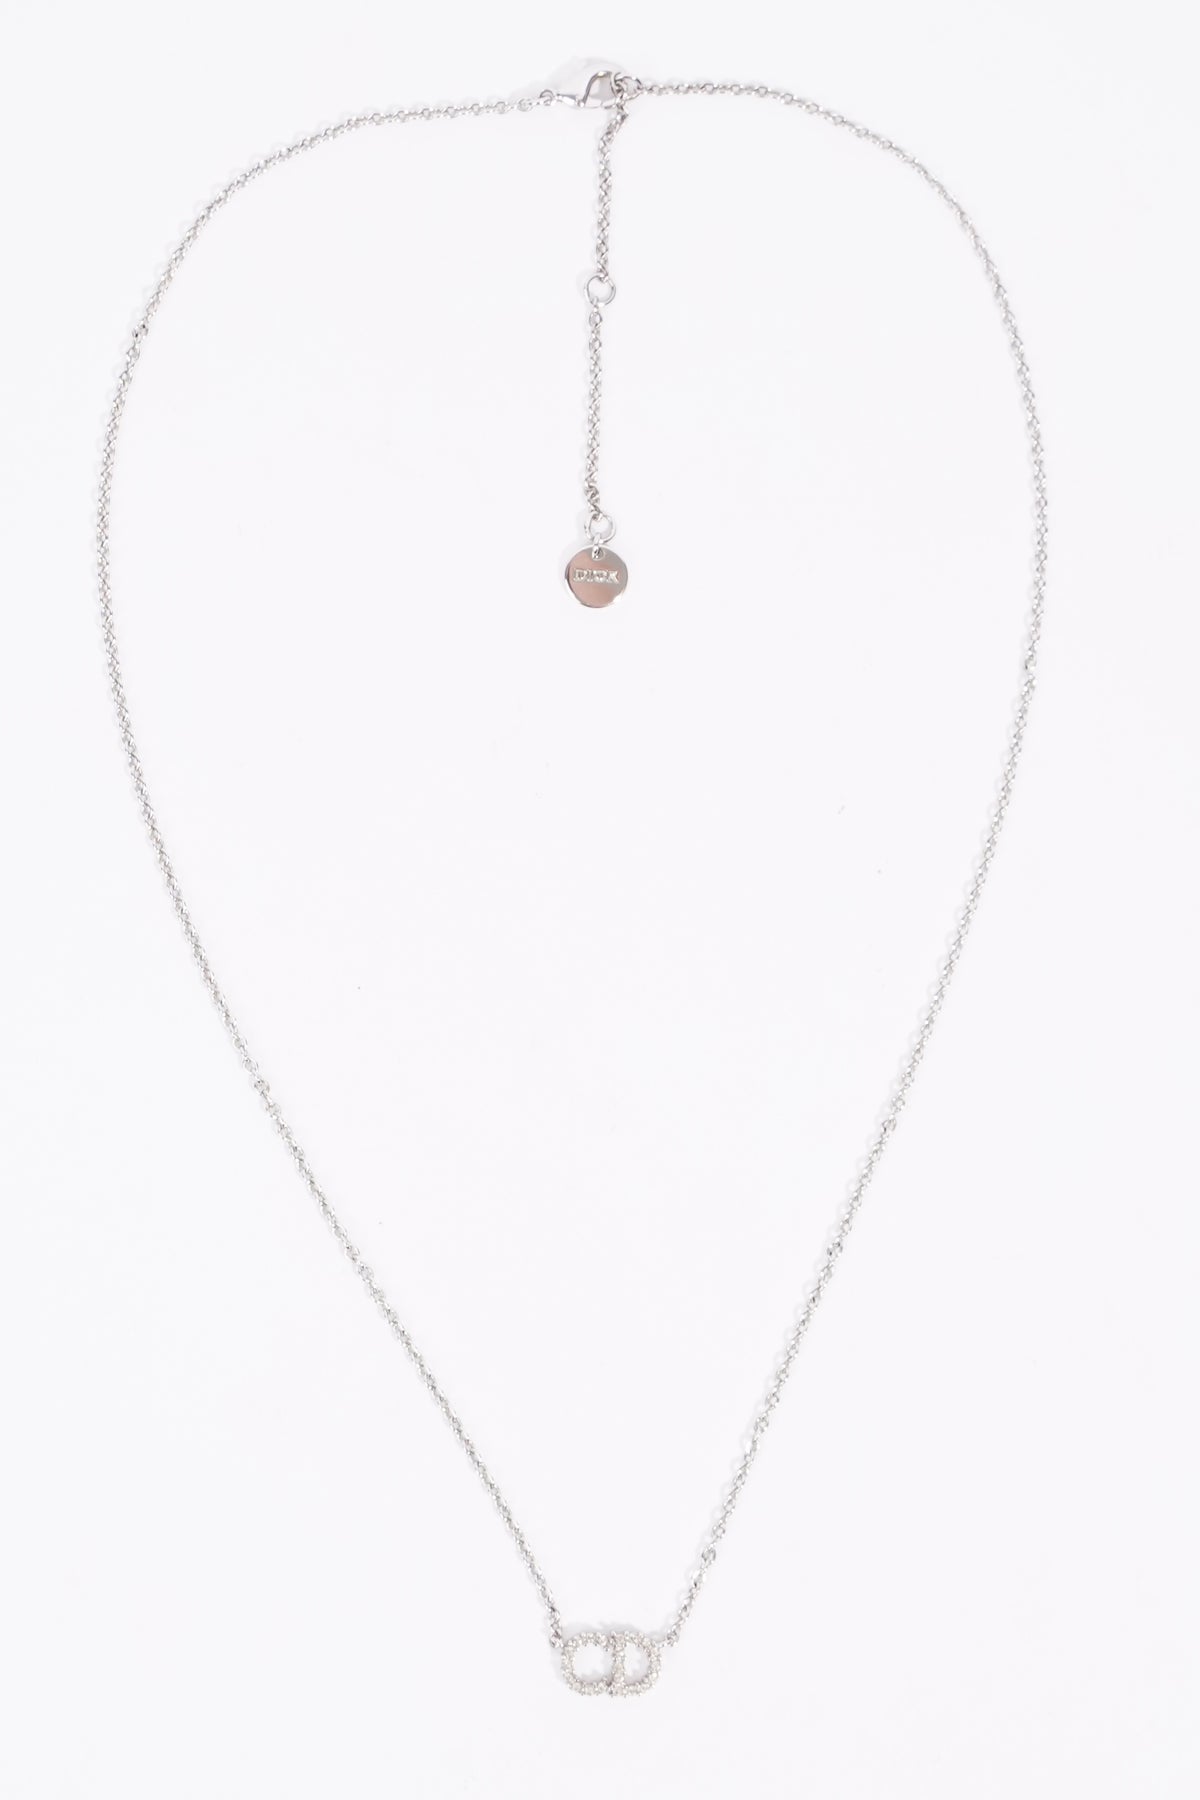 Dior Button Necklace + Bracelet - Designer Button Jewelry